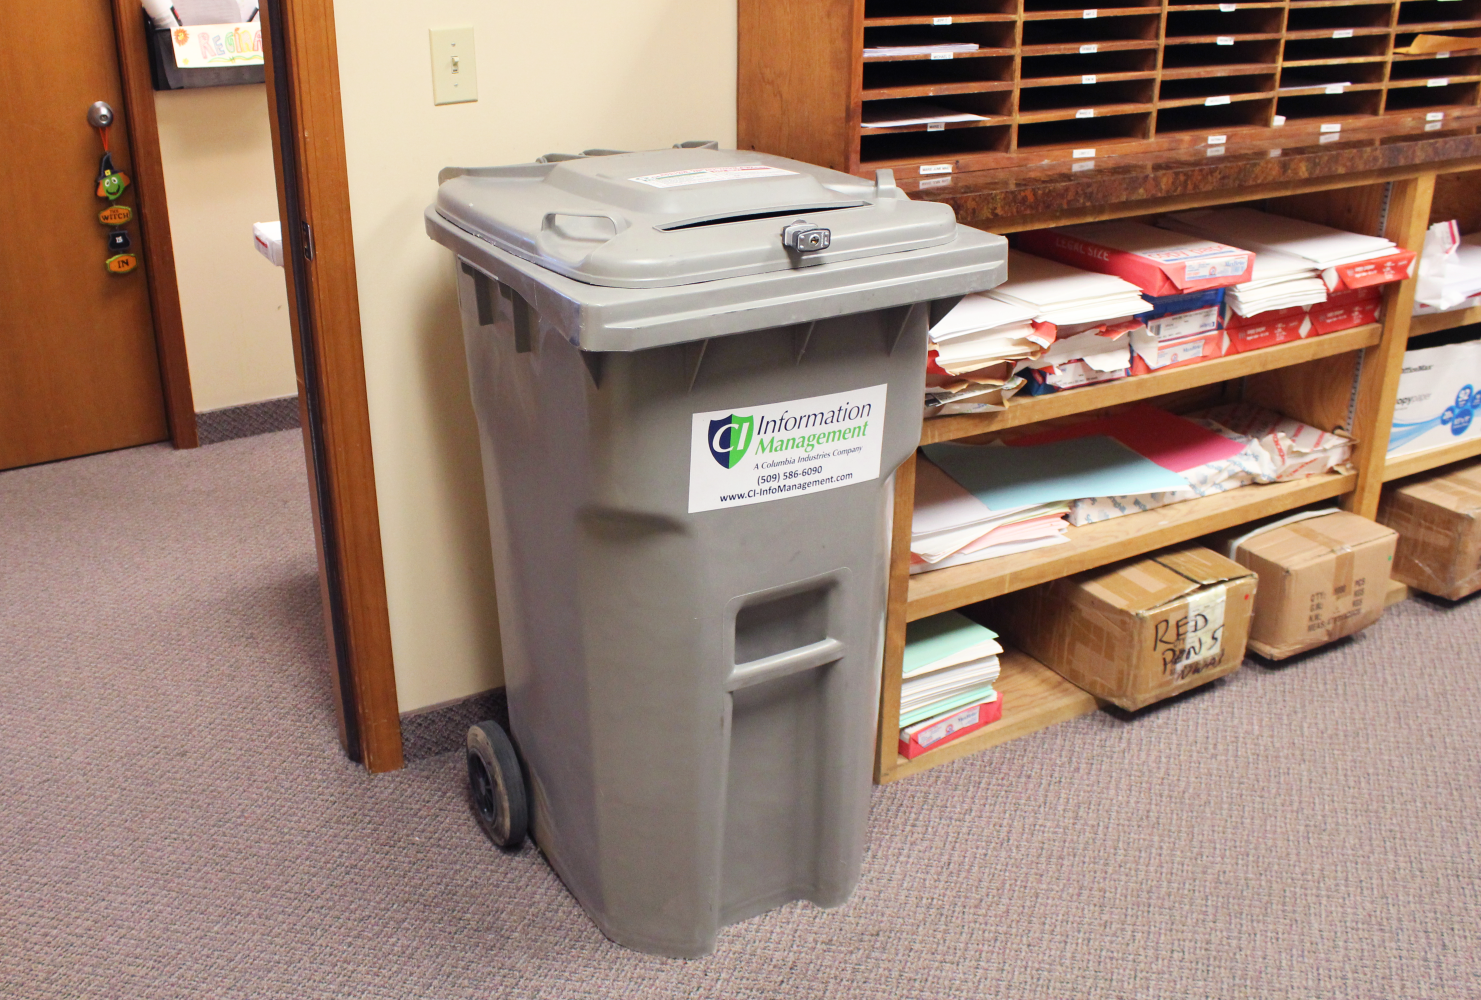 A CI Information Management 64-gallon bin